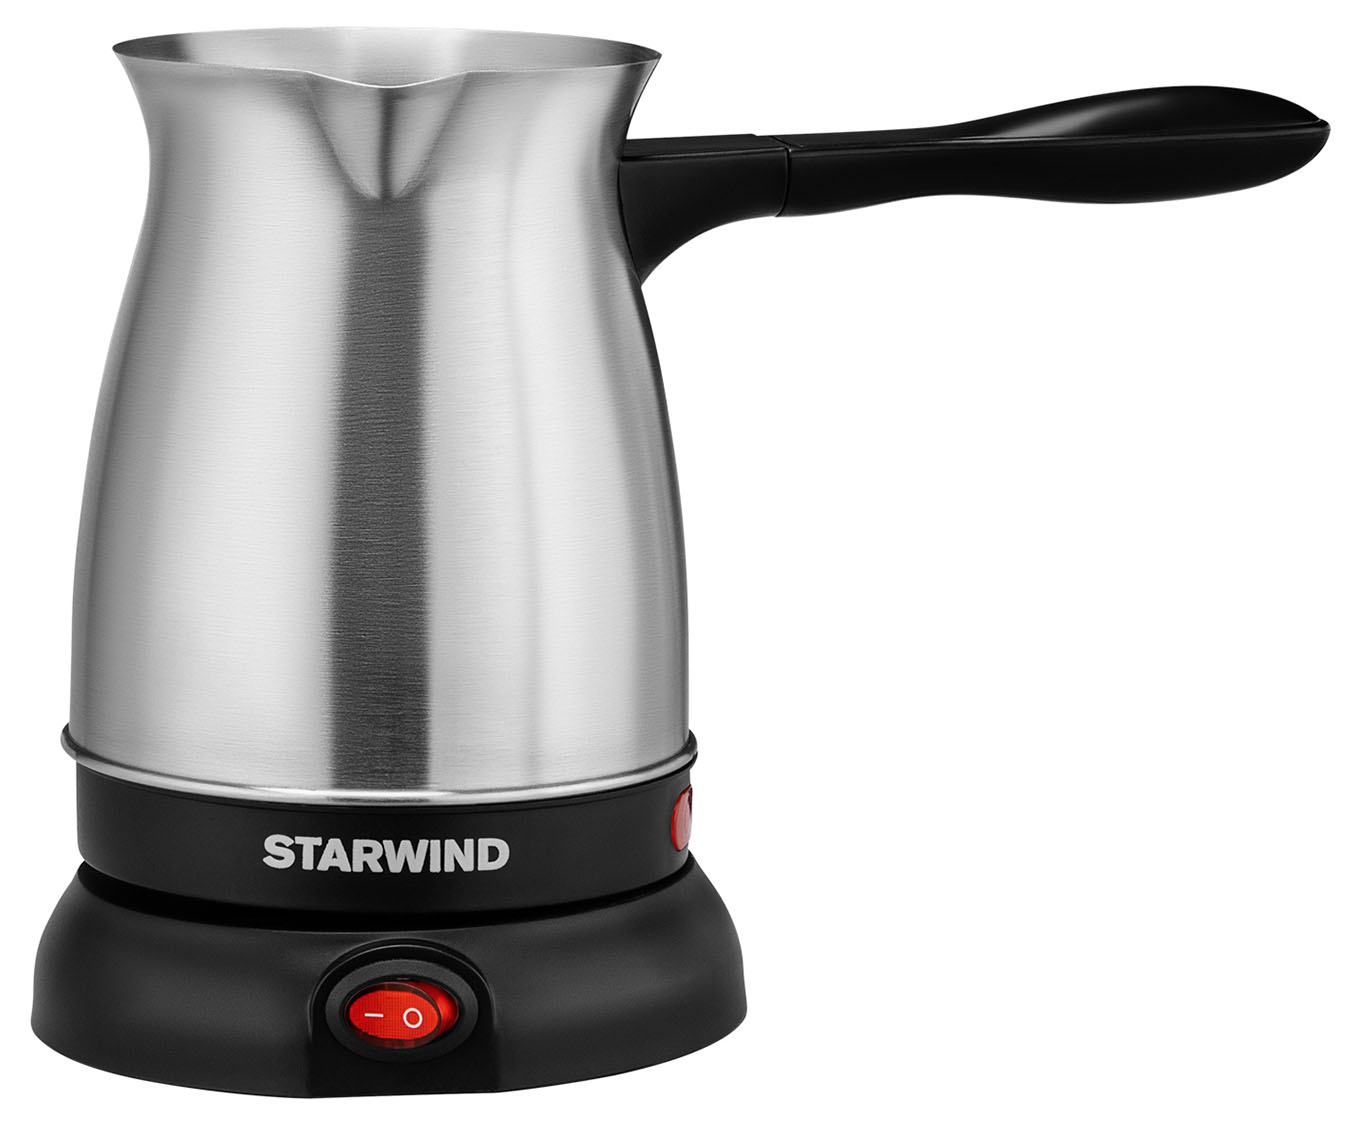 Кофеварка Электрическая турка Starwind STG6054 серебристый/черный от магазина Старвинд